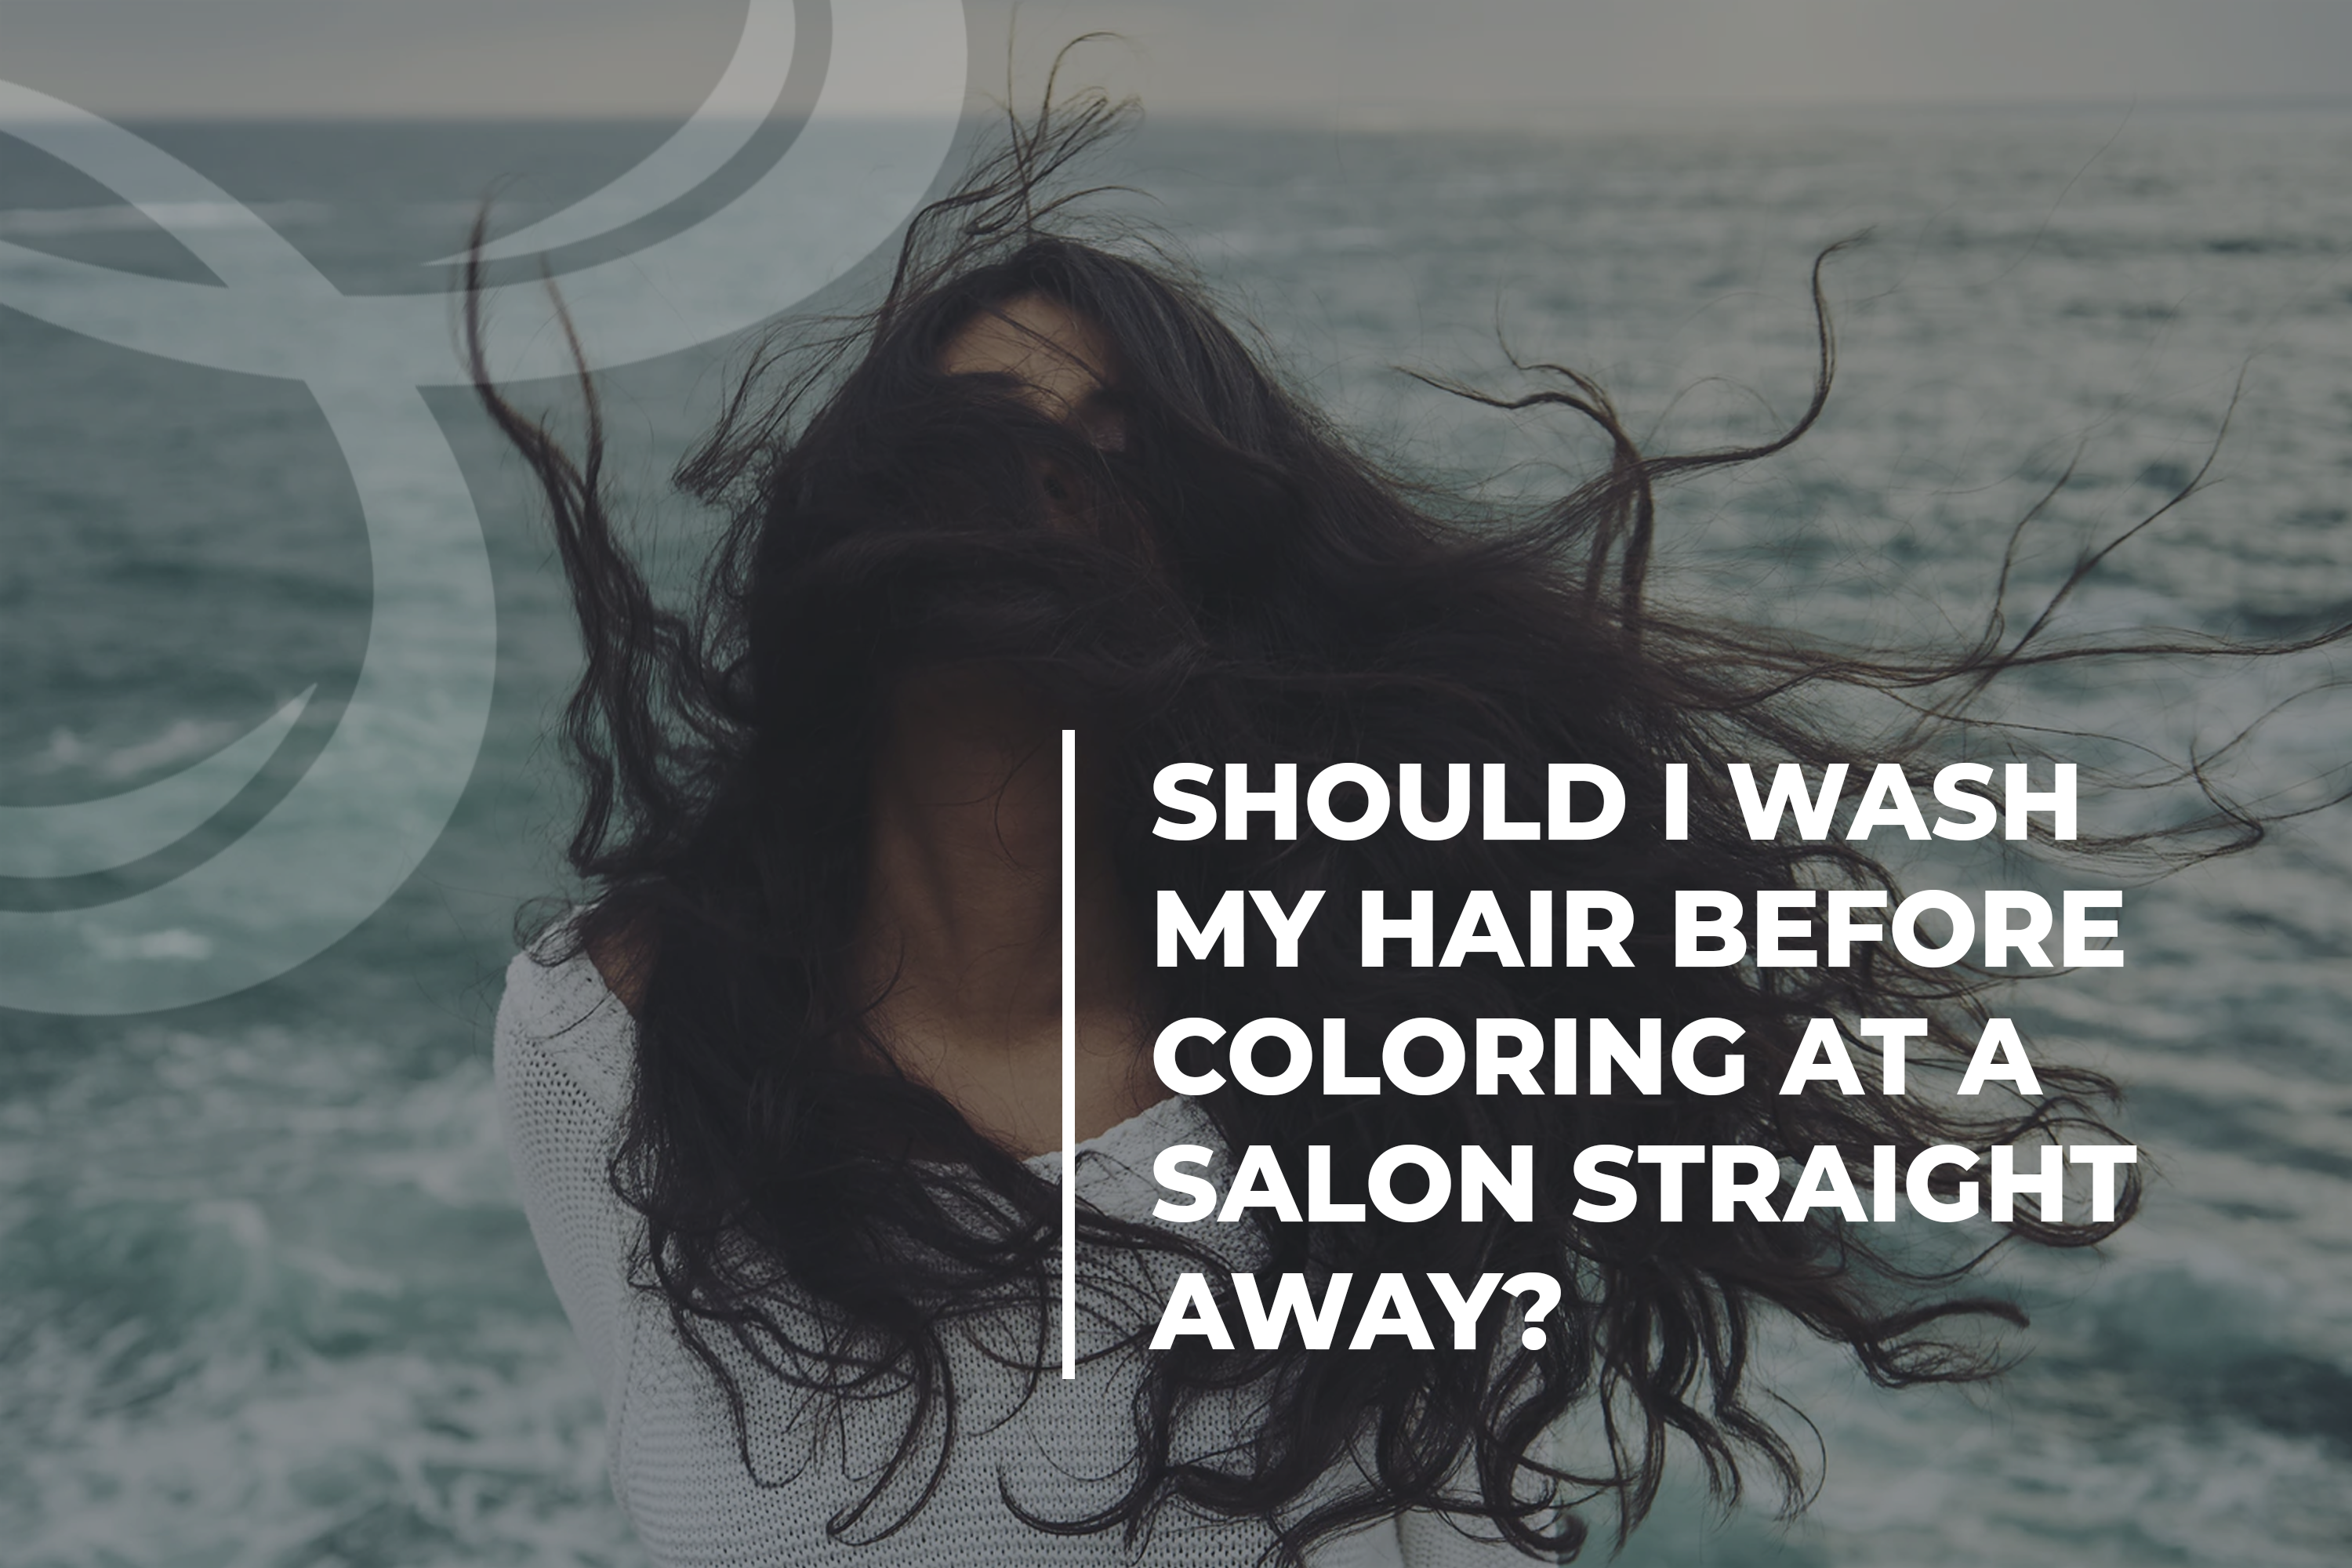 Should I wash my hair before coloring at a salon straight away